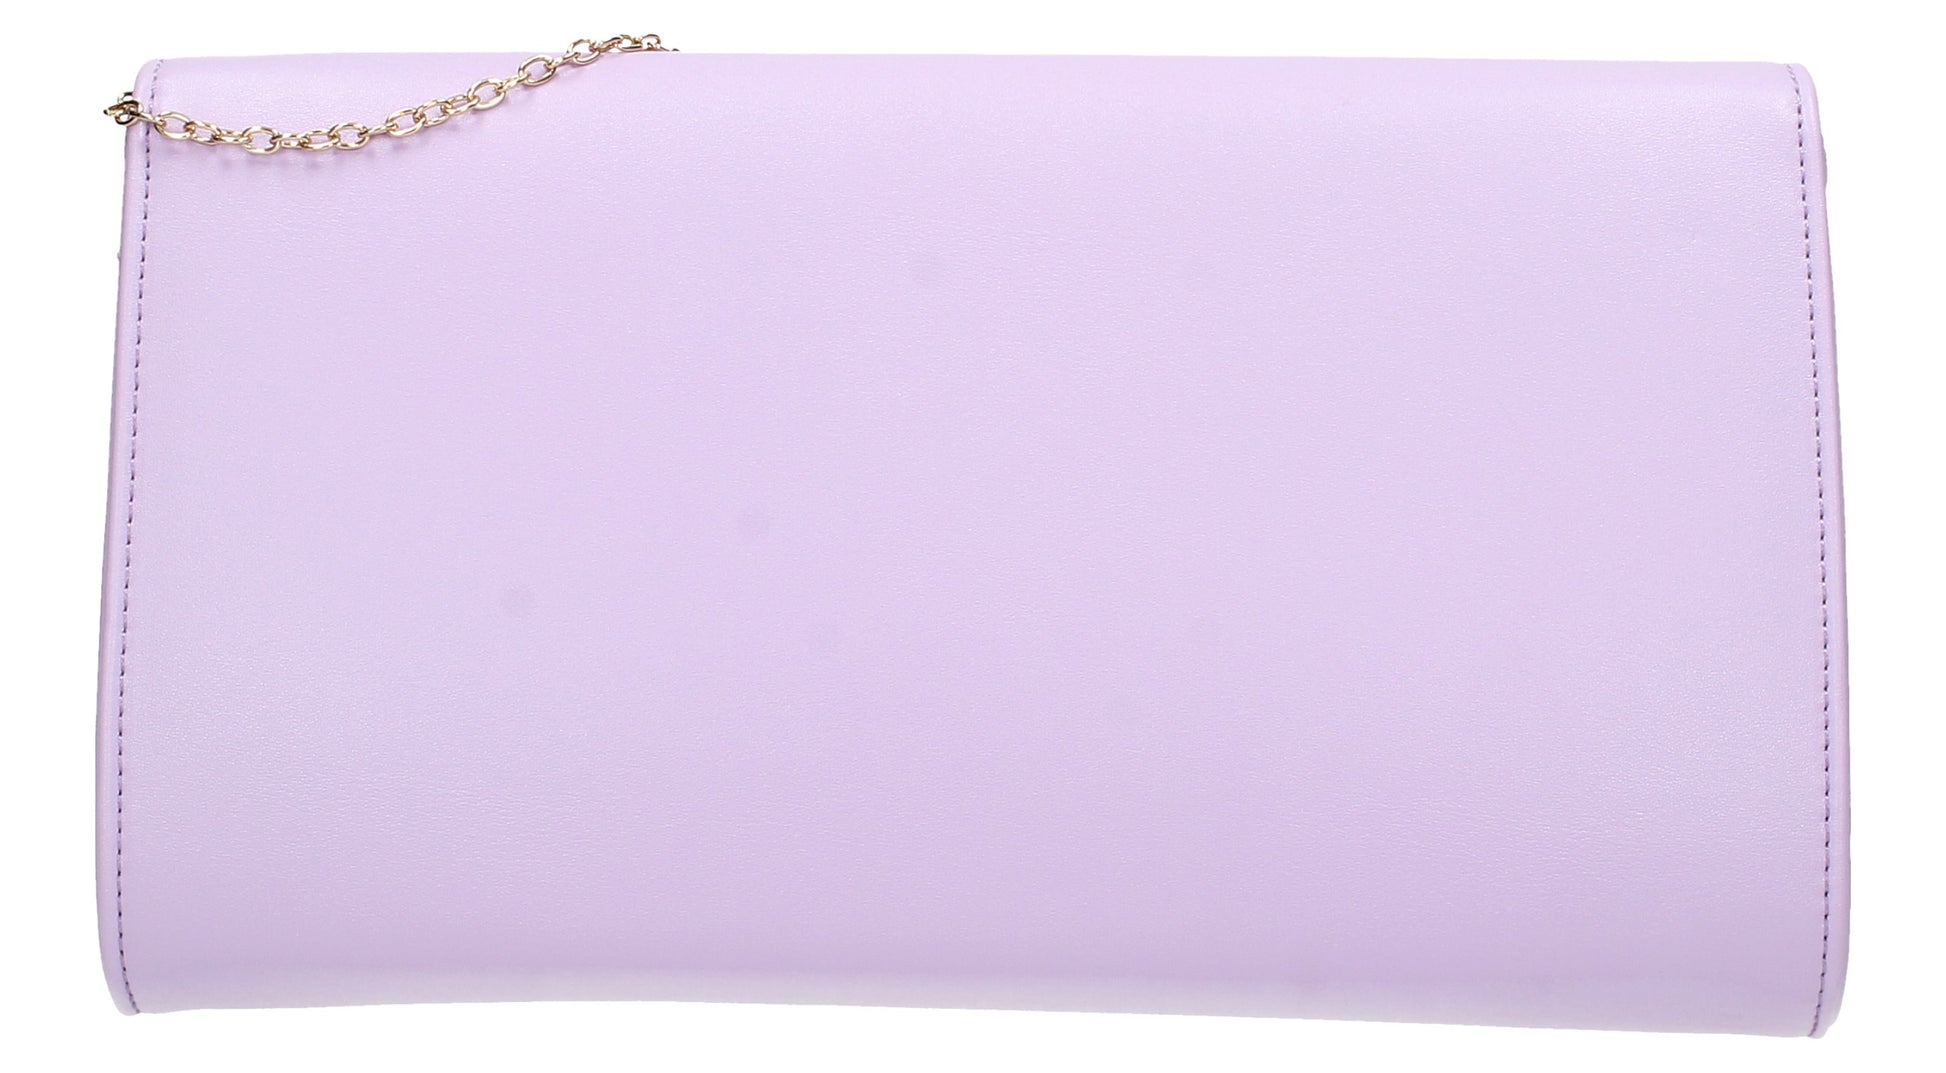 SWANKYSWANS Laura Bow Clutch Bag Lilac Cute Cheap Clutch Bag For Weddings School and Work